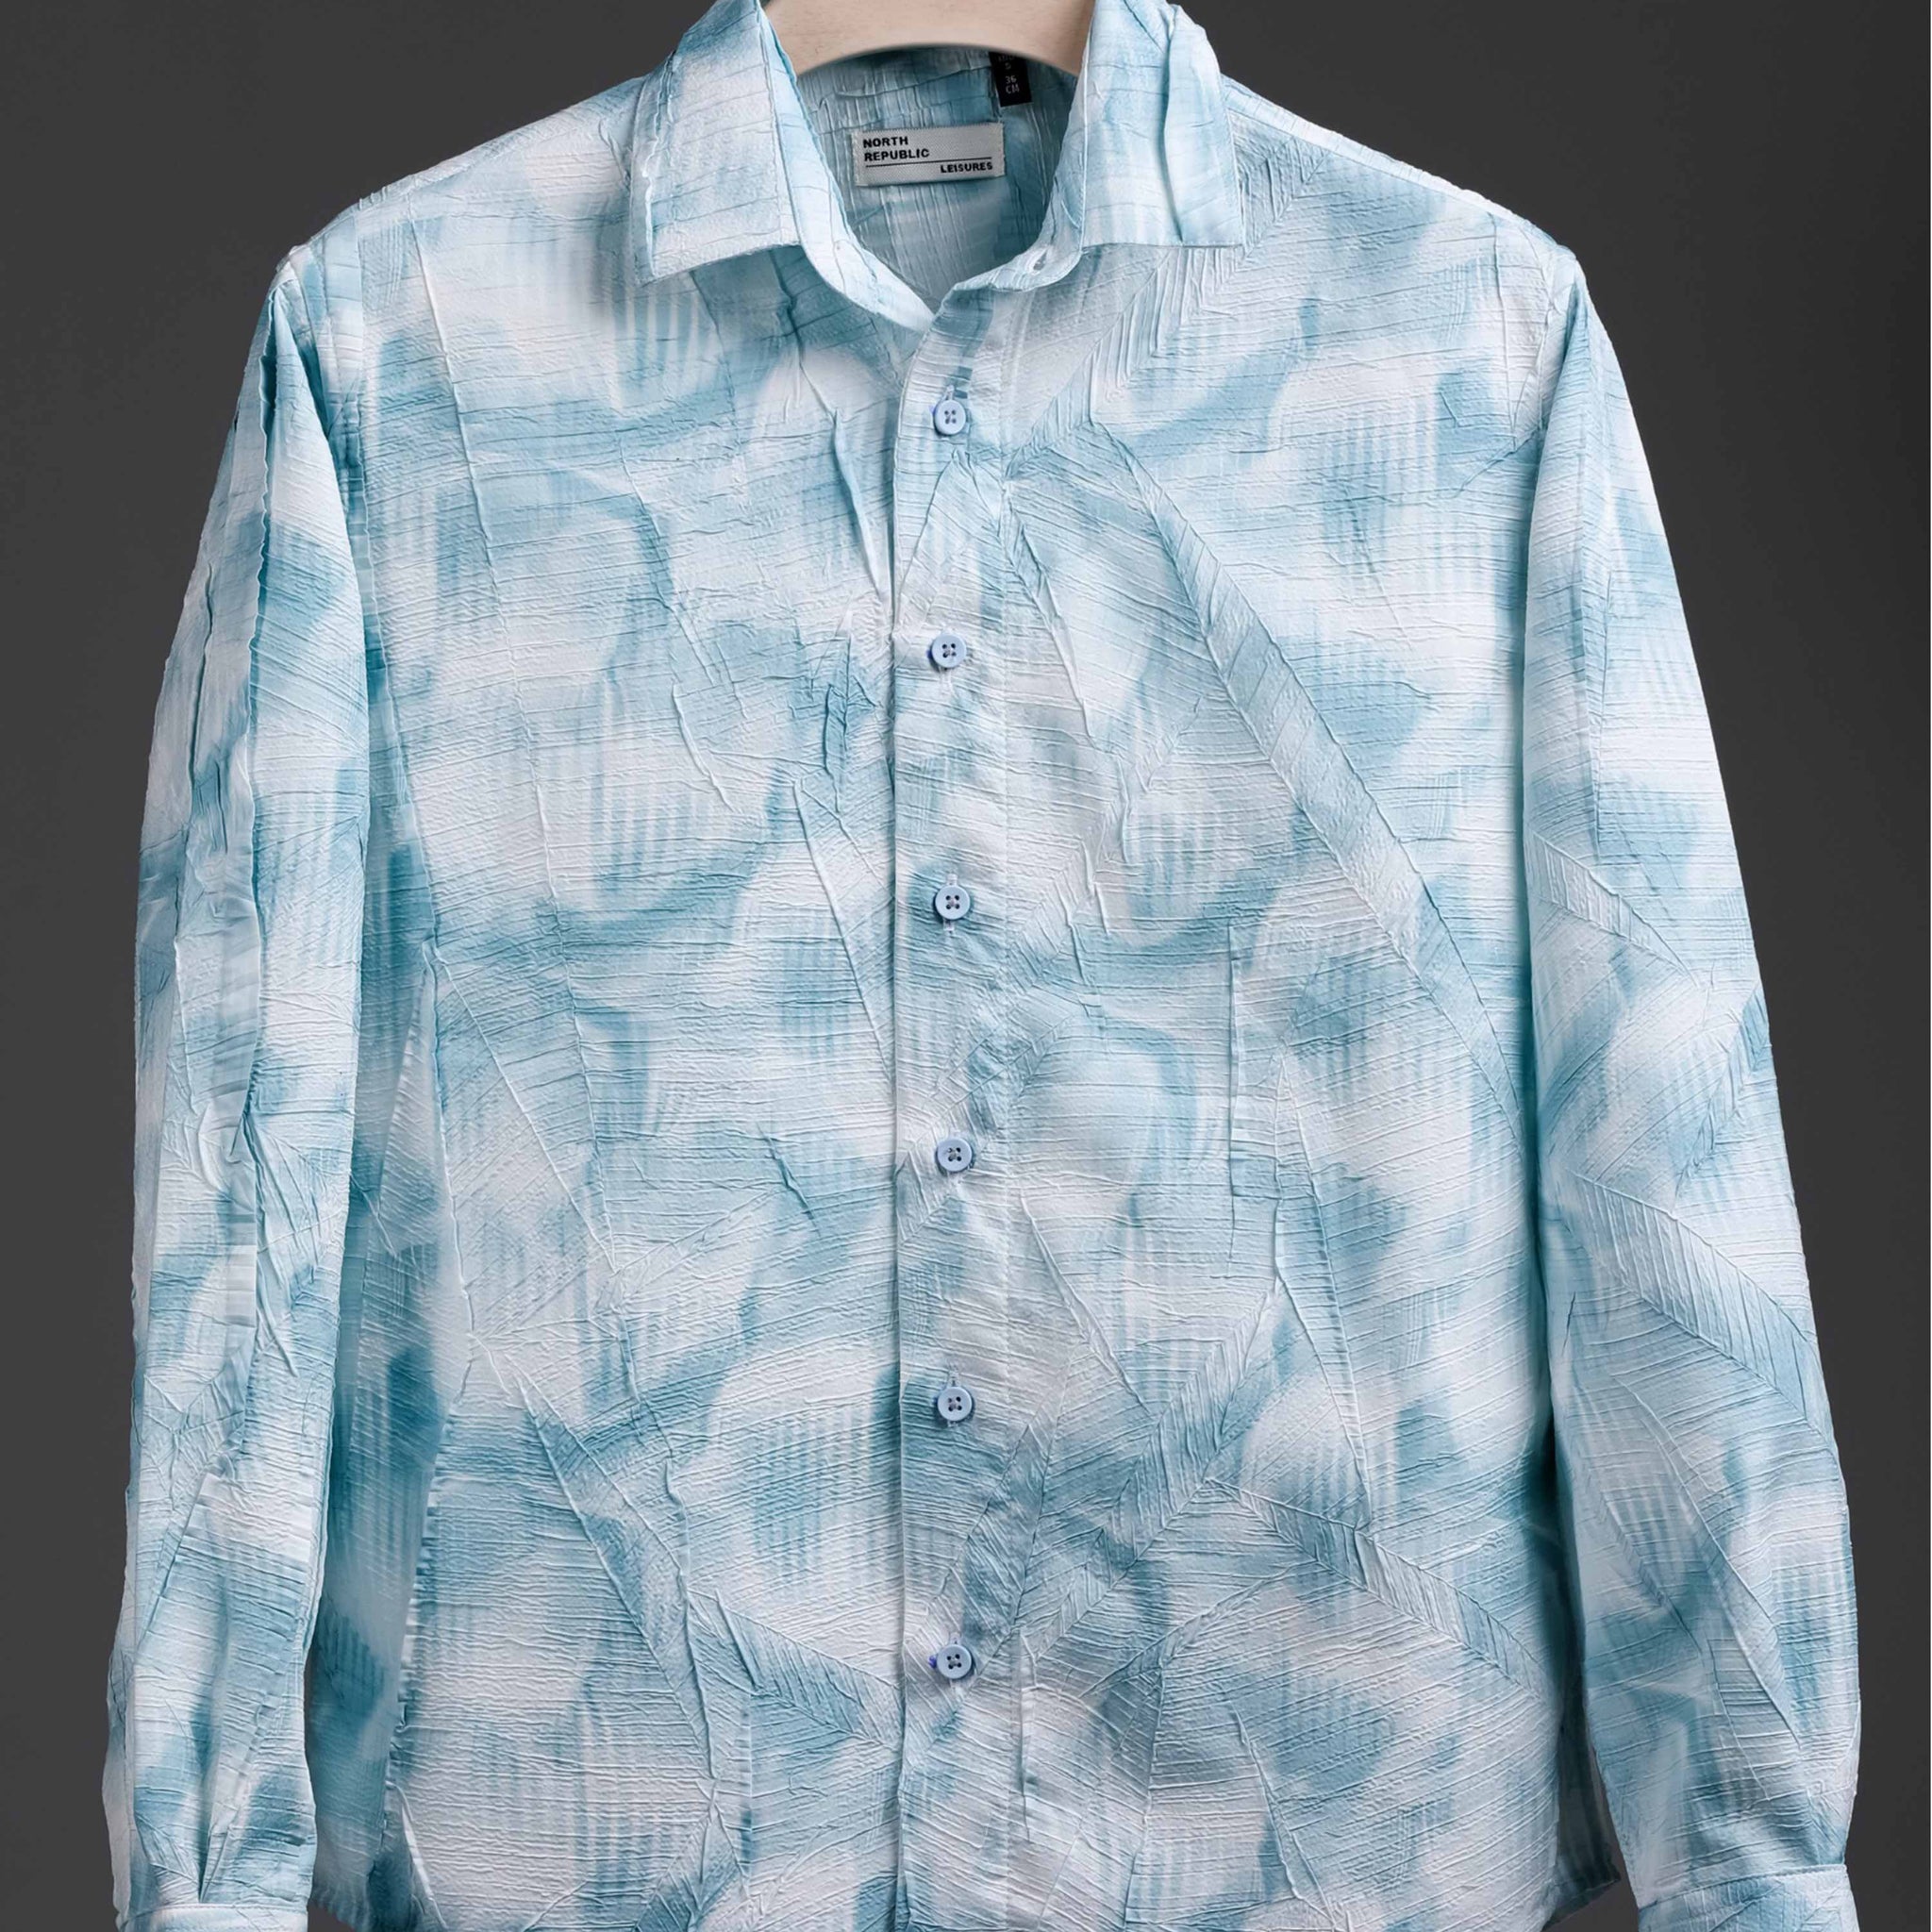 Soft Finish Leaf Pattern Foiling printed Shirt | Sea Blue